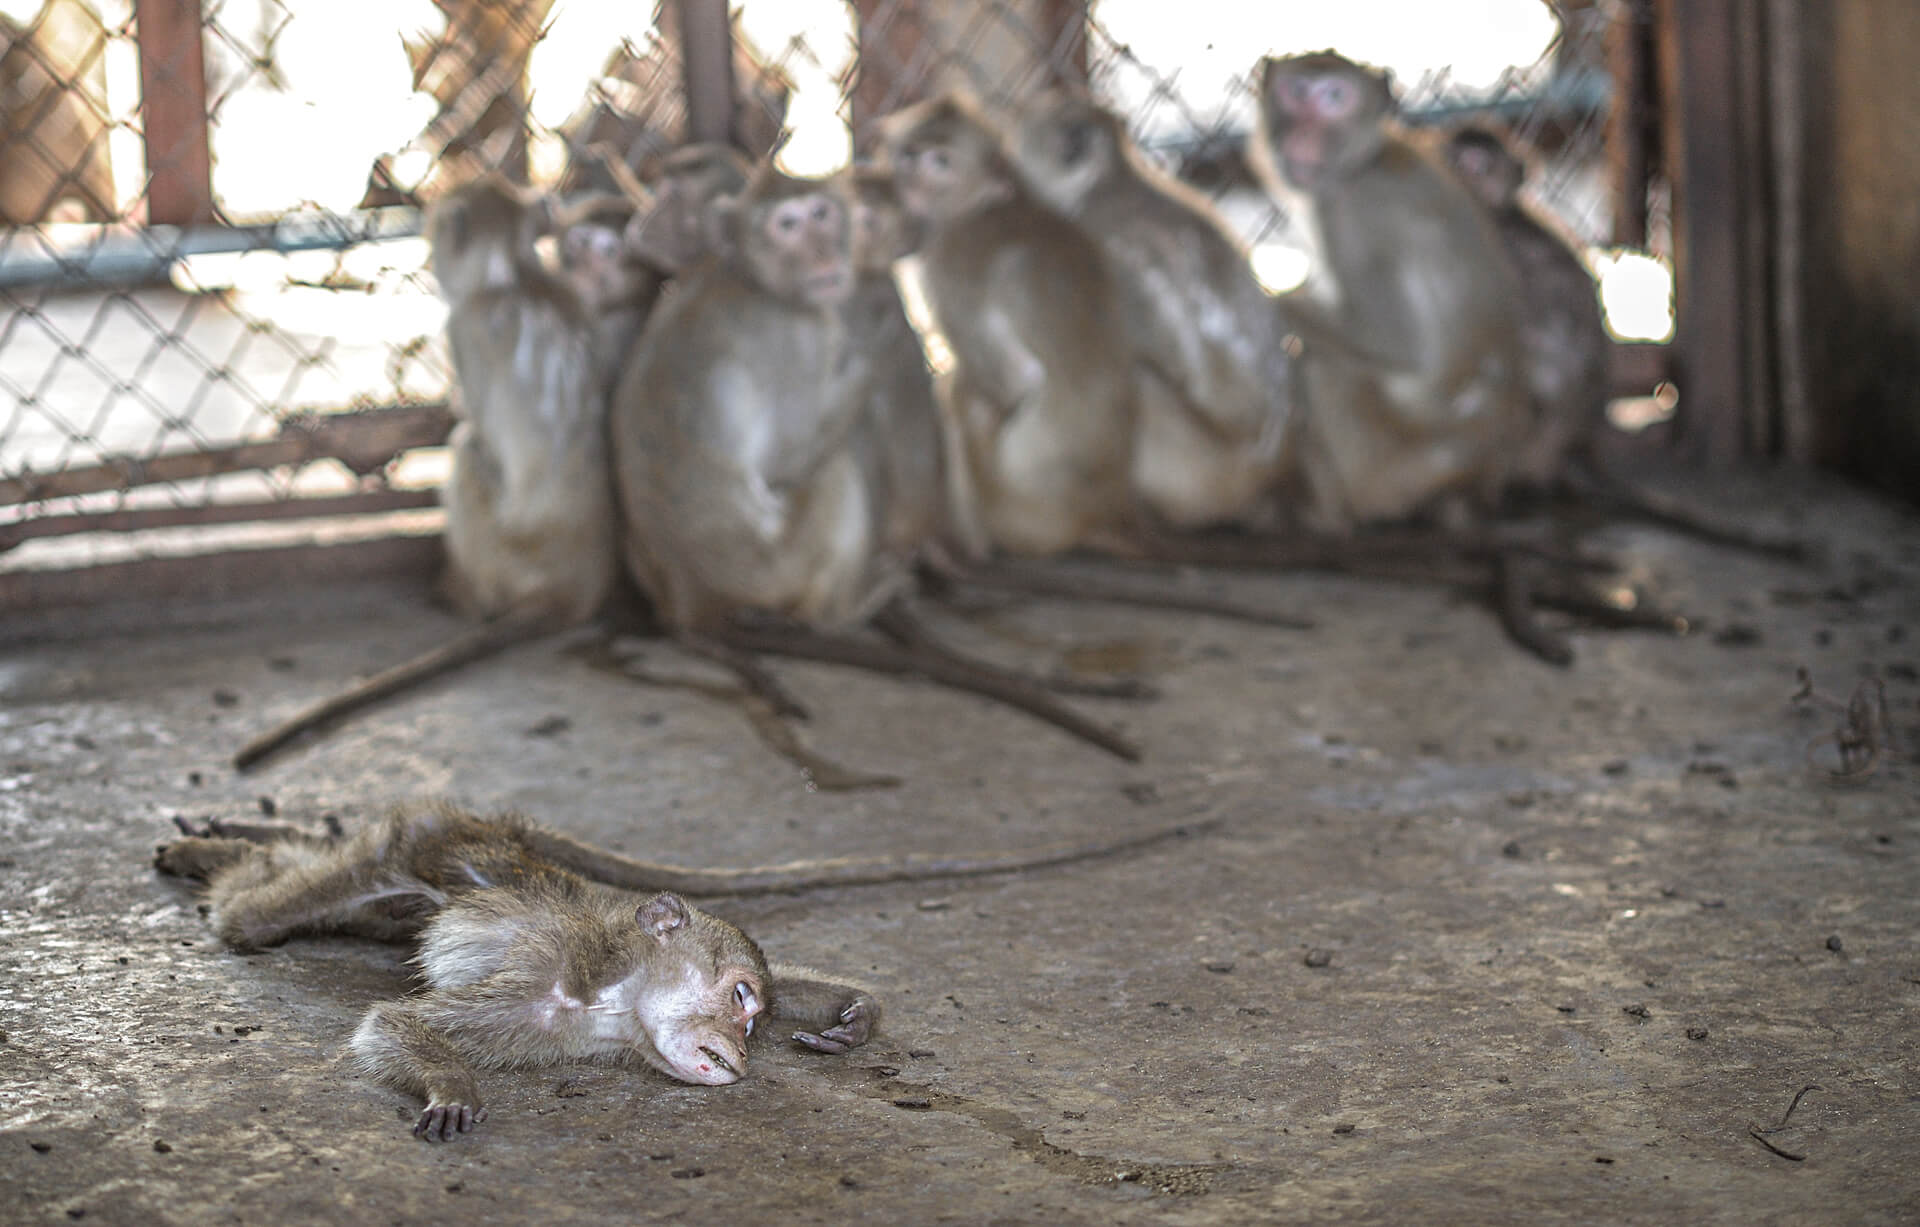 https://investigaciones.petalatino.com/wp-content/uploads/2022/07/VIV-A-dead-macaque-at-macaque-breeding-facility-Jo-Anne-McArthur-We-Animals-Media-WAM10526-1.jpg